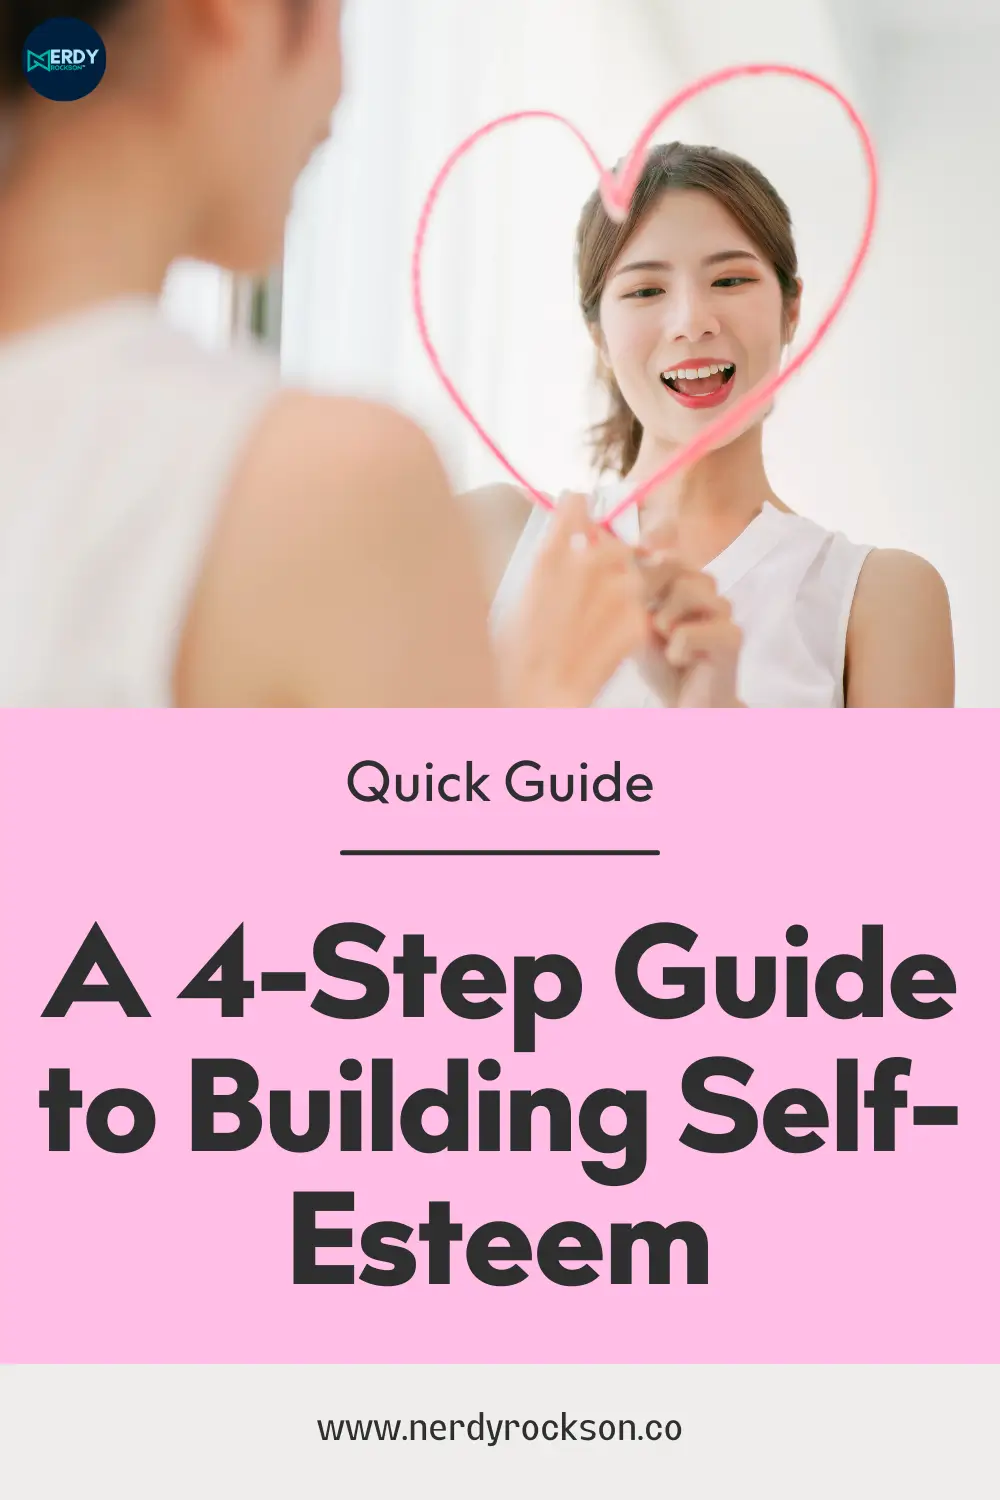 4 Simple Steps to Building Your Self-esteem